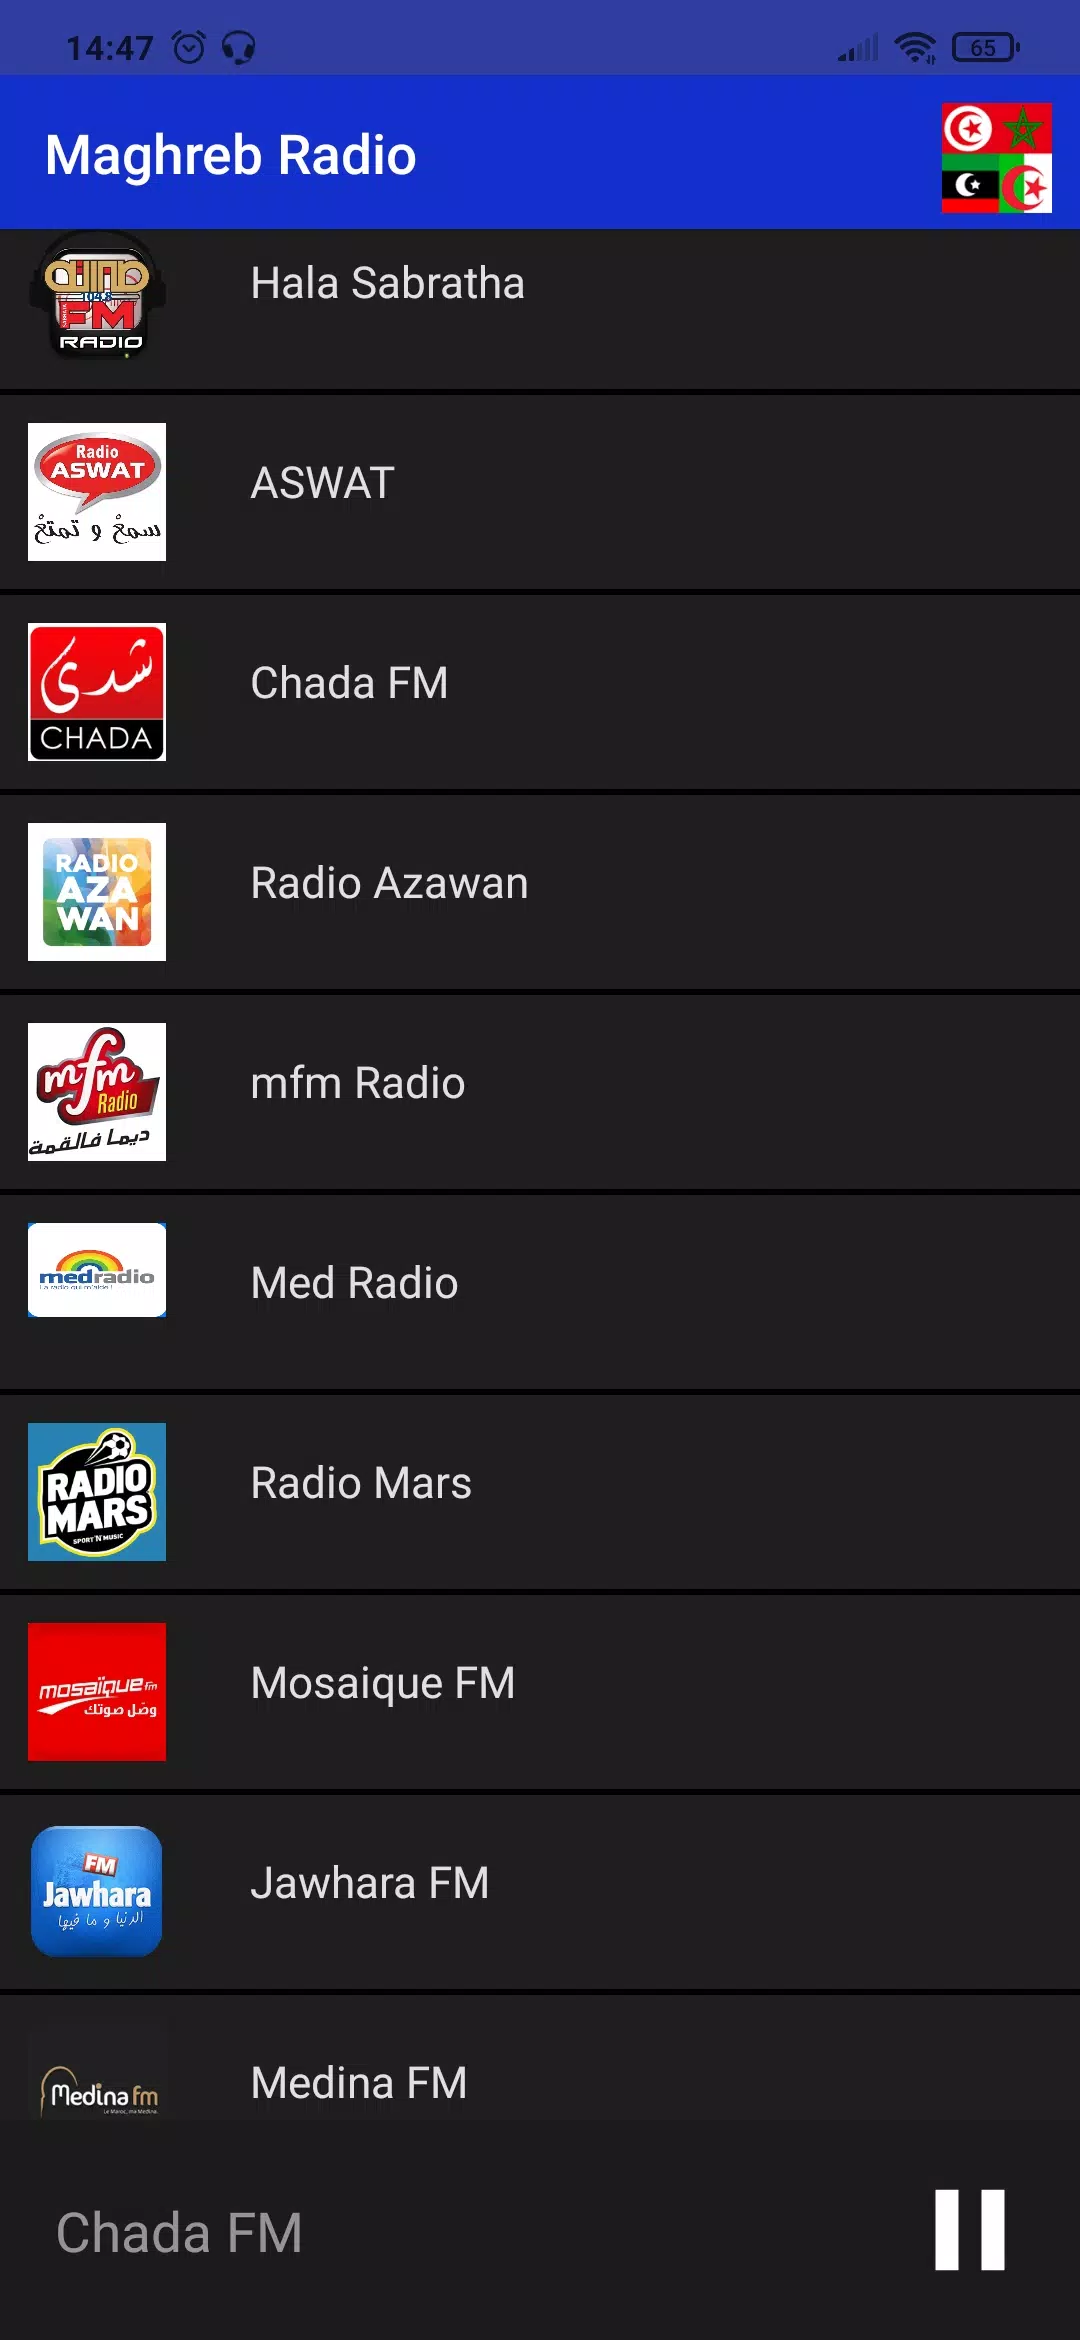 Descarga de APK de Maghreb Radio para Android